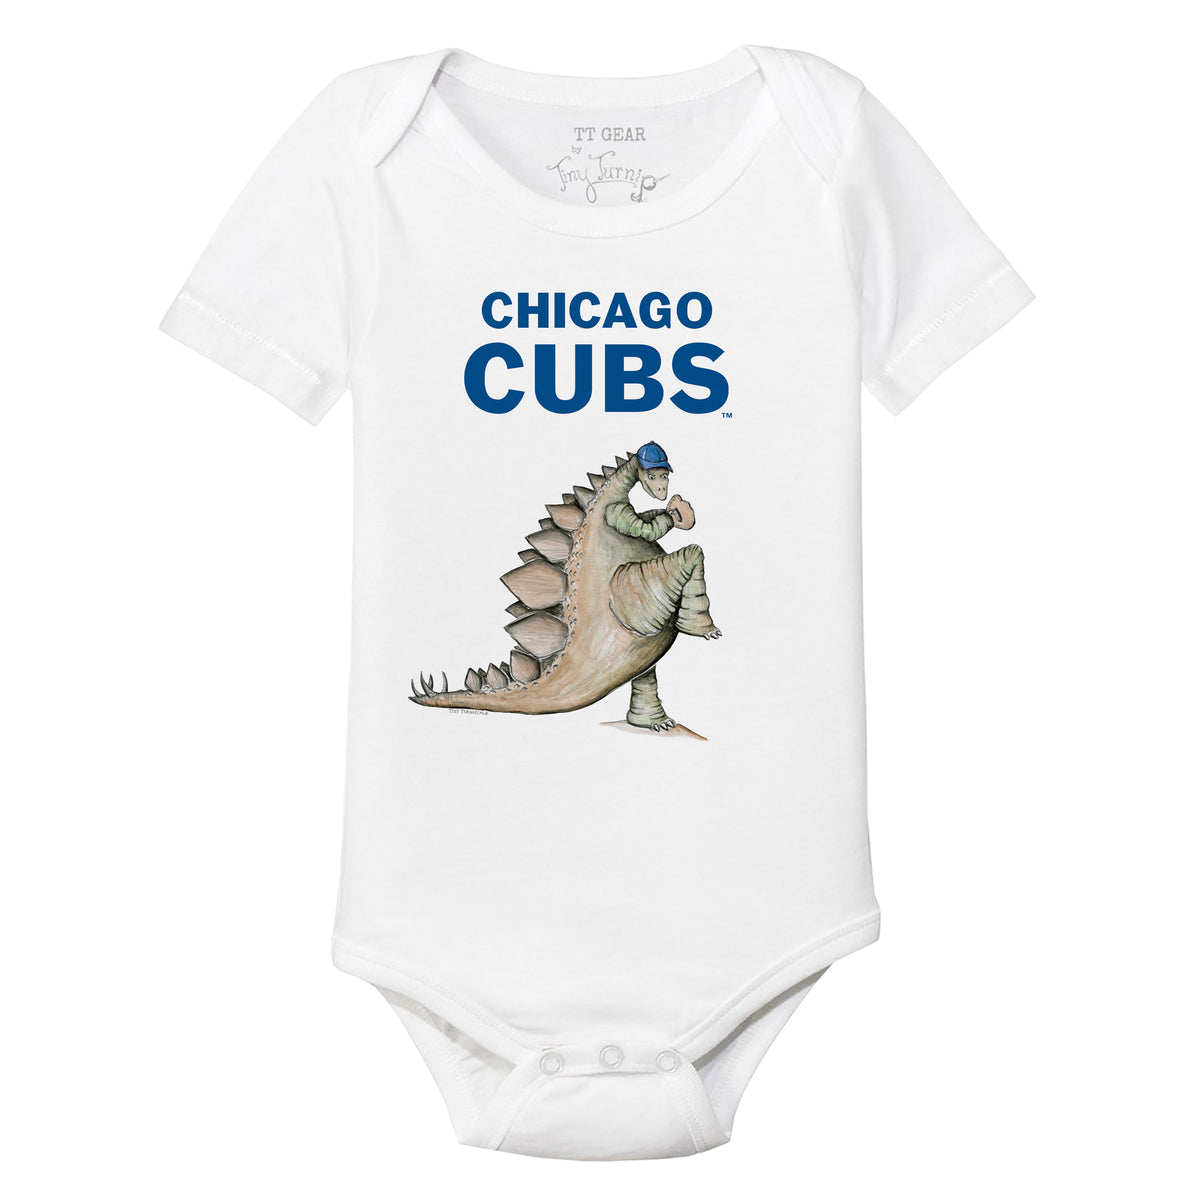 Chicago Cubs Girl Teddy Short Sleeve Snapper 12M / Royal Blue